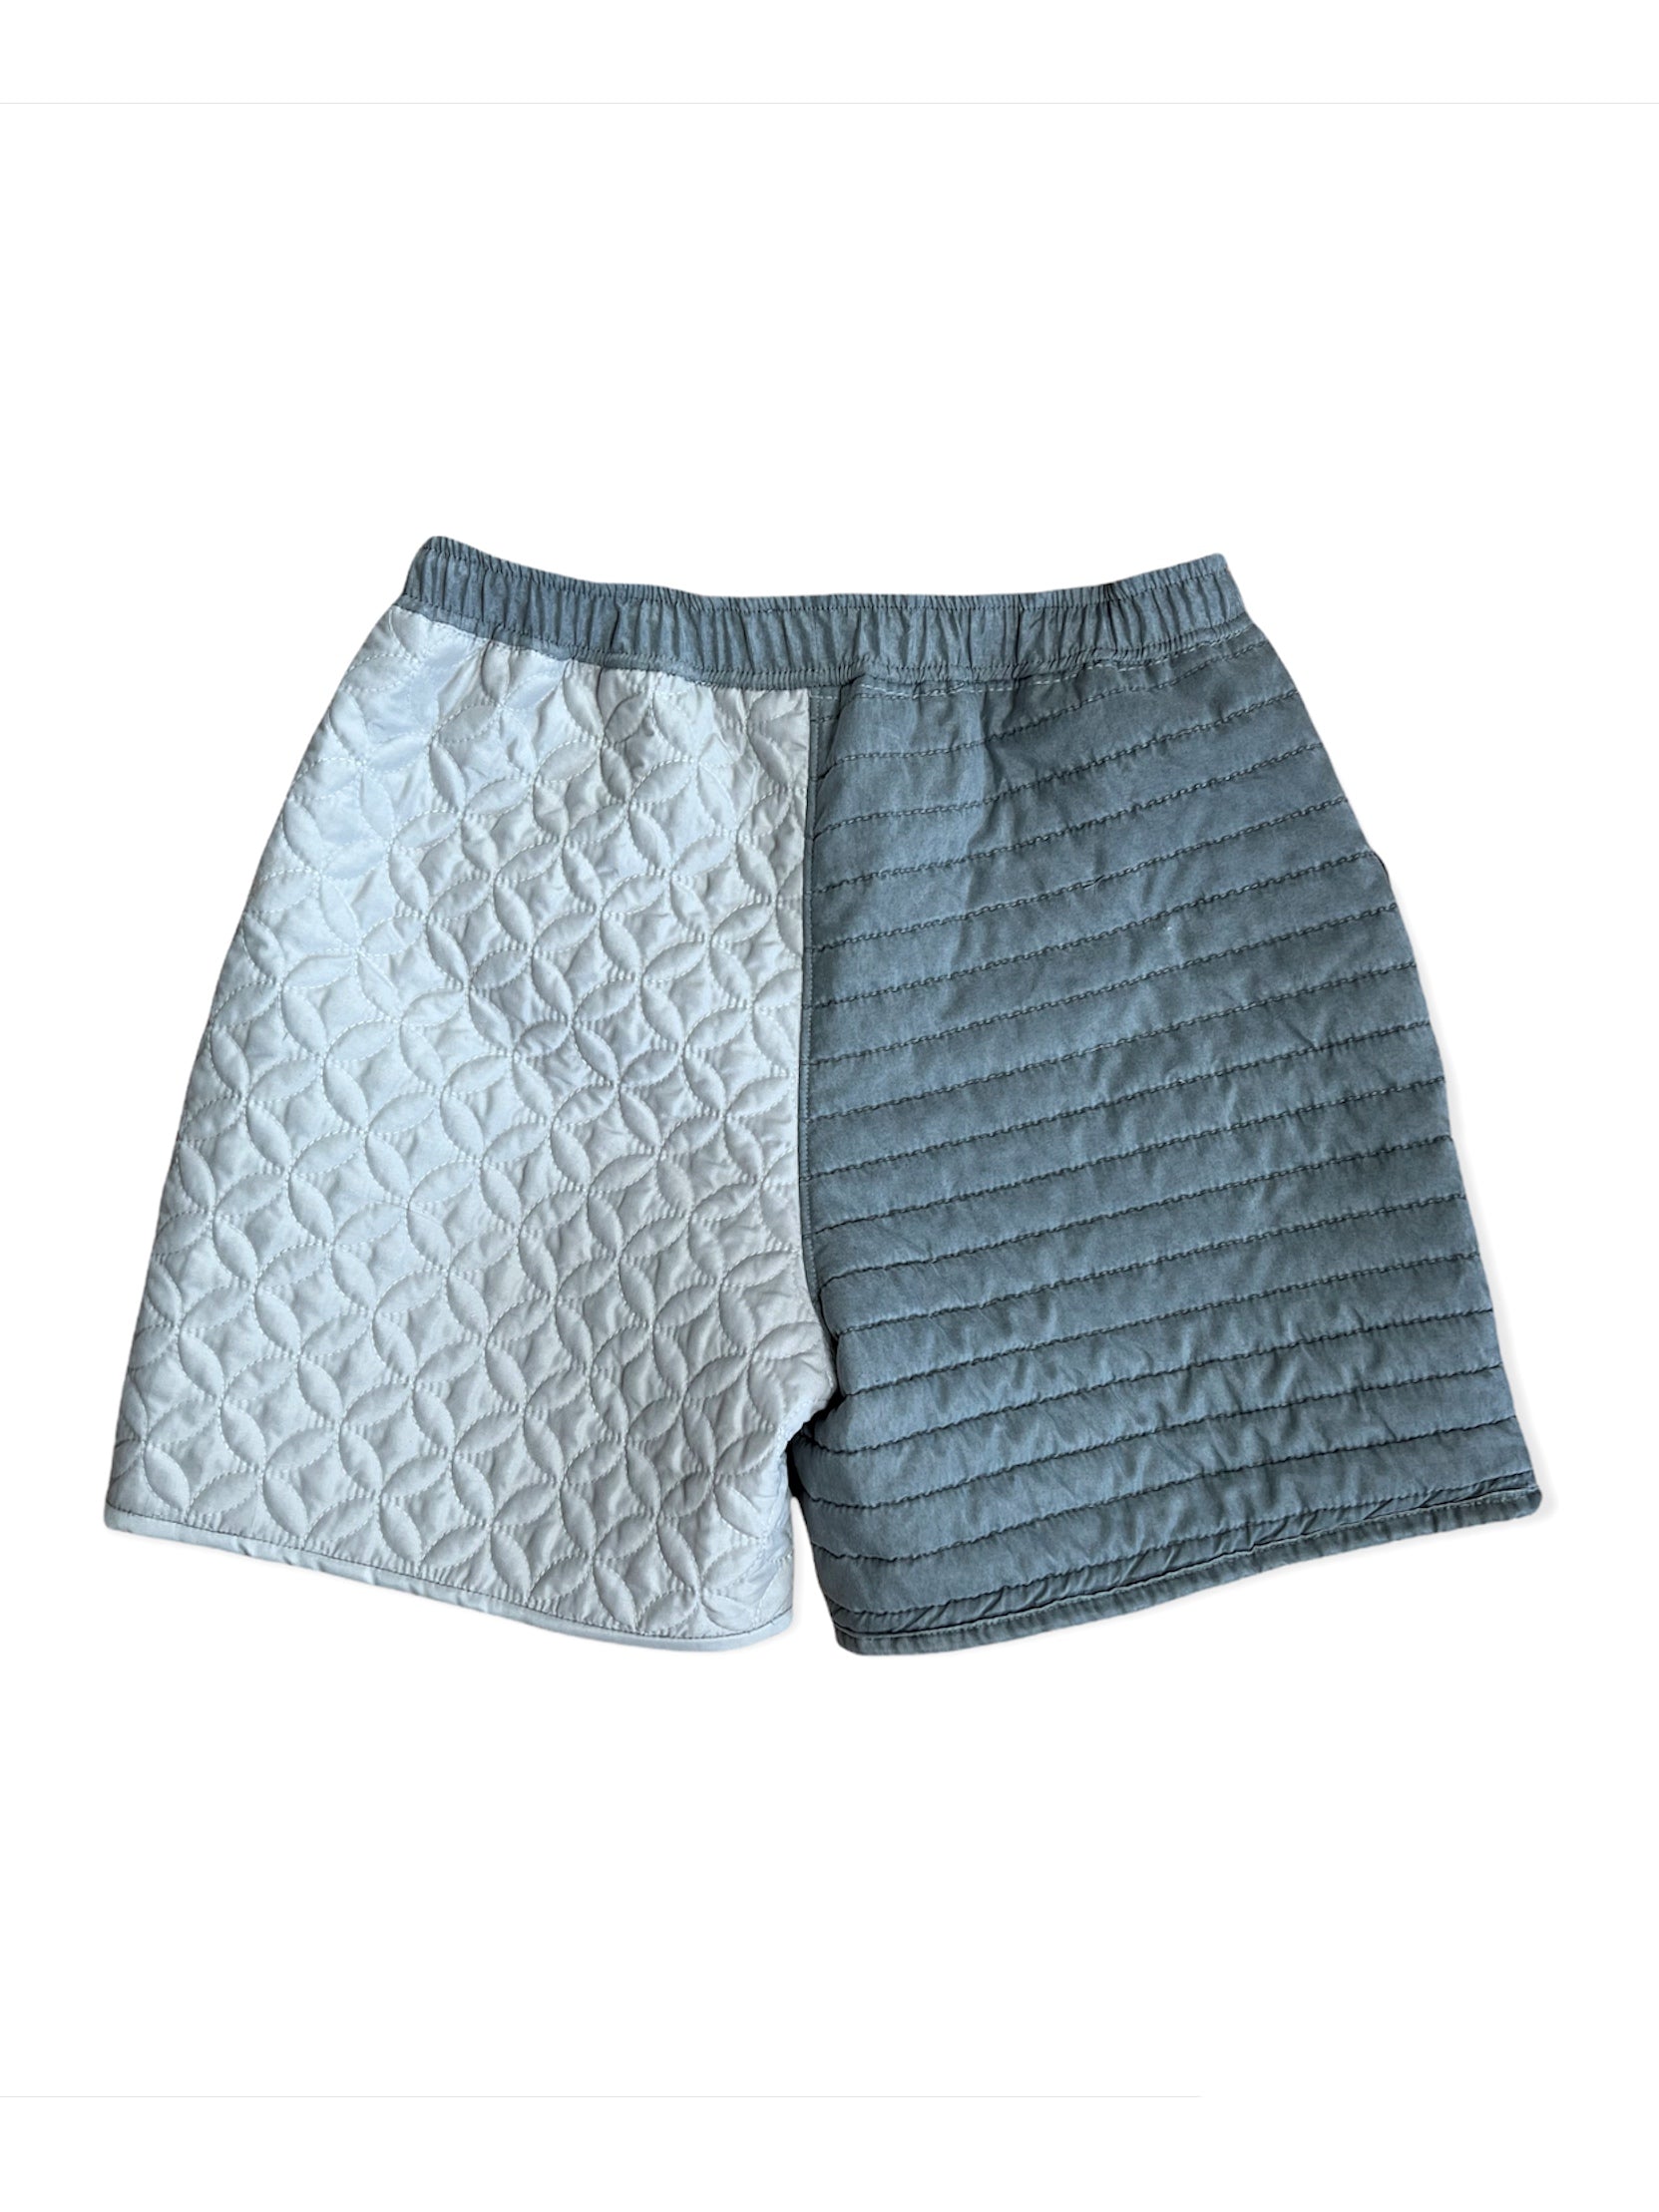 quilted shorts gray drawstring